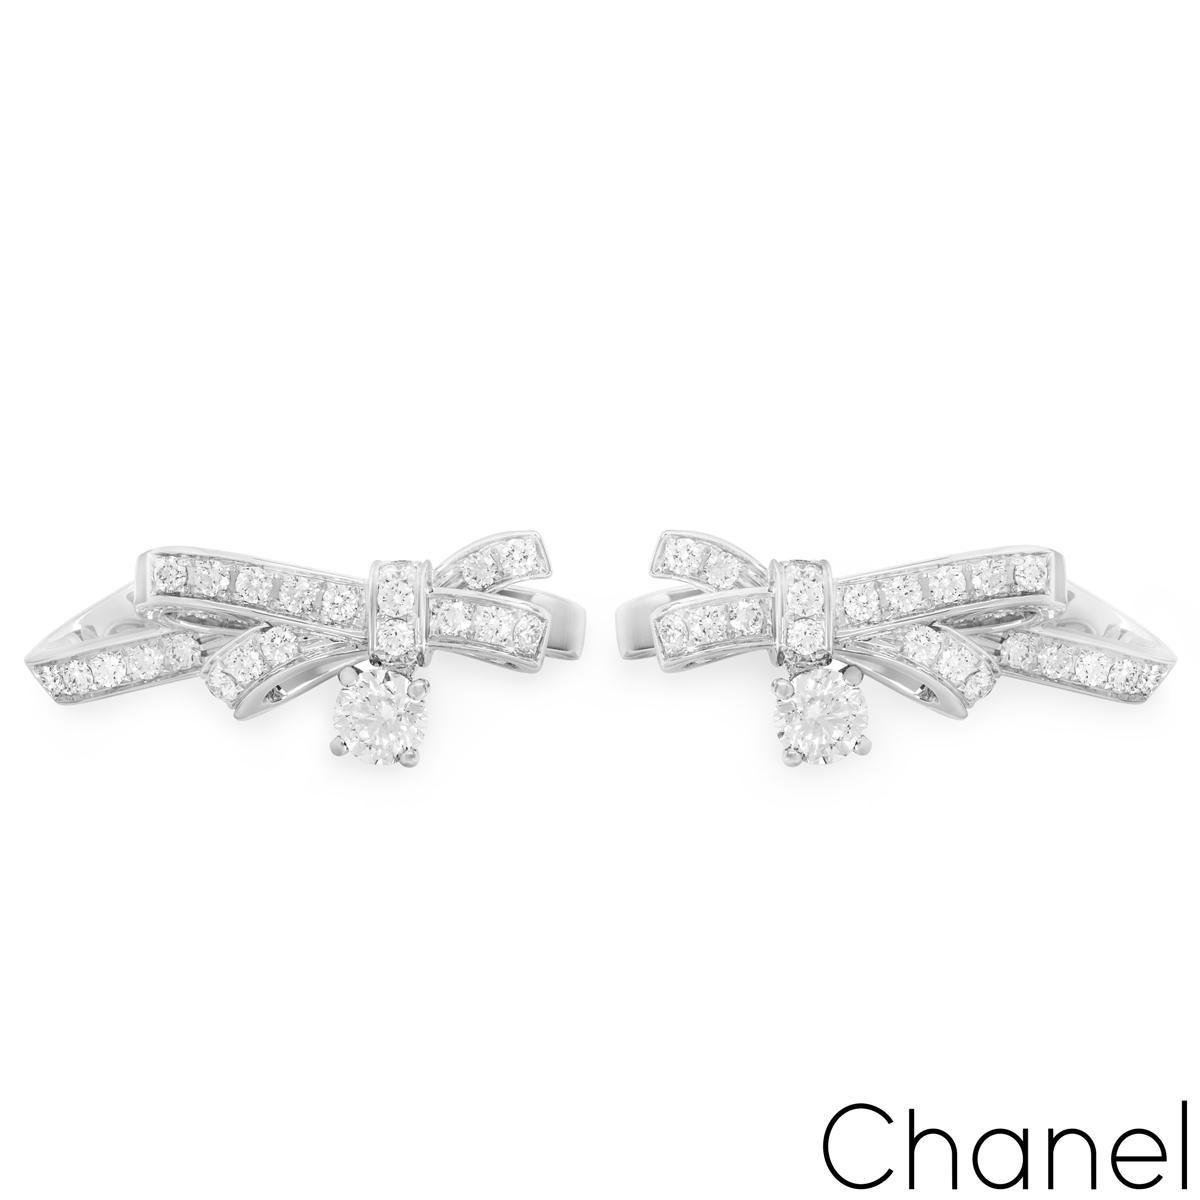 Chanel Earrings White - 291 For Sale on 1stDibs